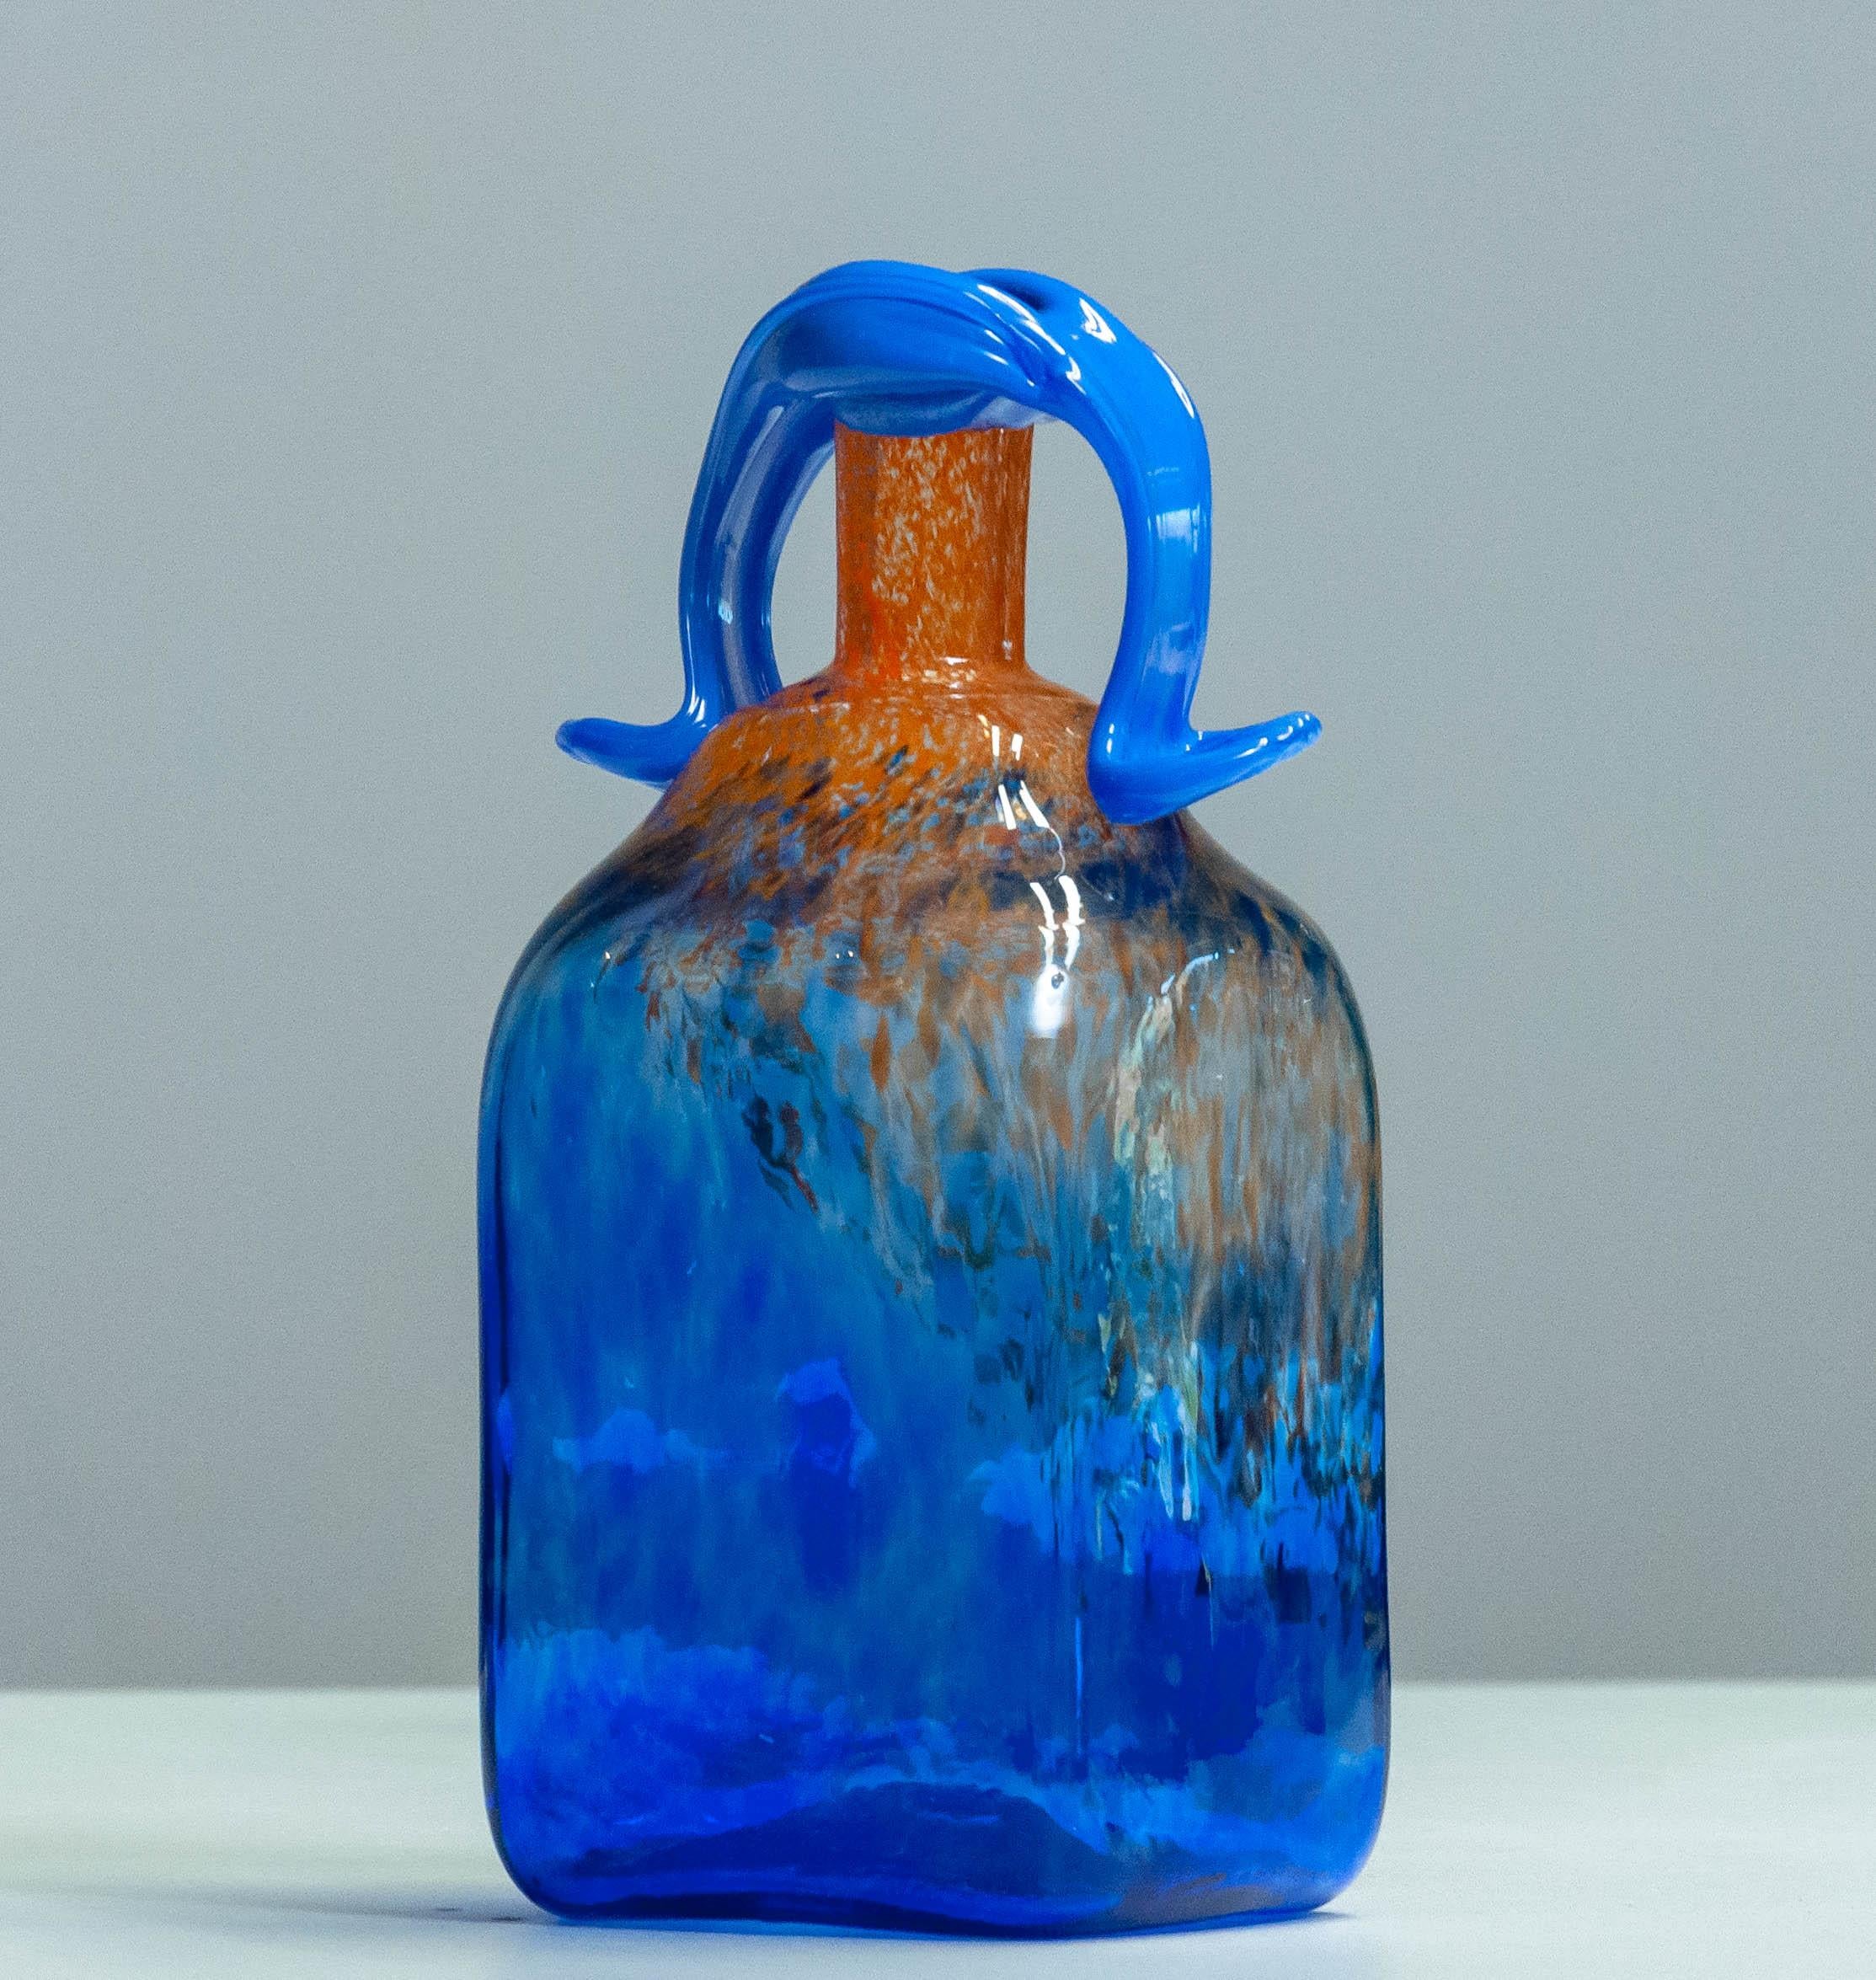 Late 20th Century 1980s Blue Art Glass Bottle Handmade by Staffan Gellerstedt at Studio Glashyttan For Sale